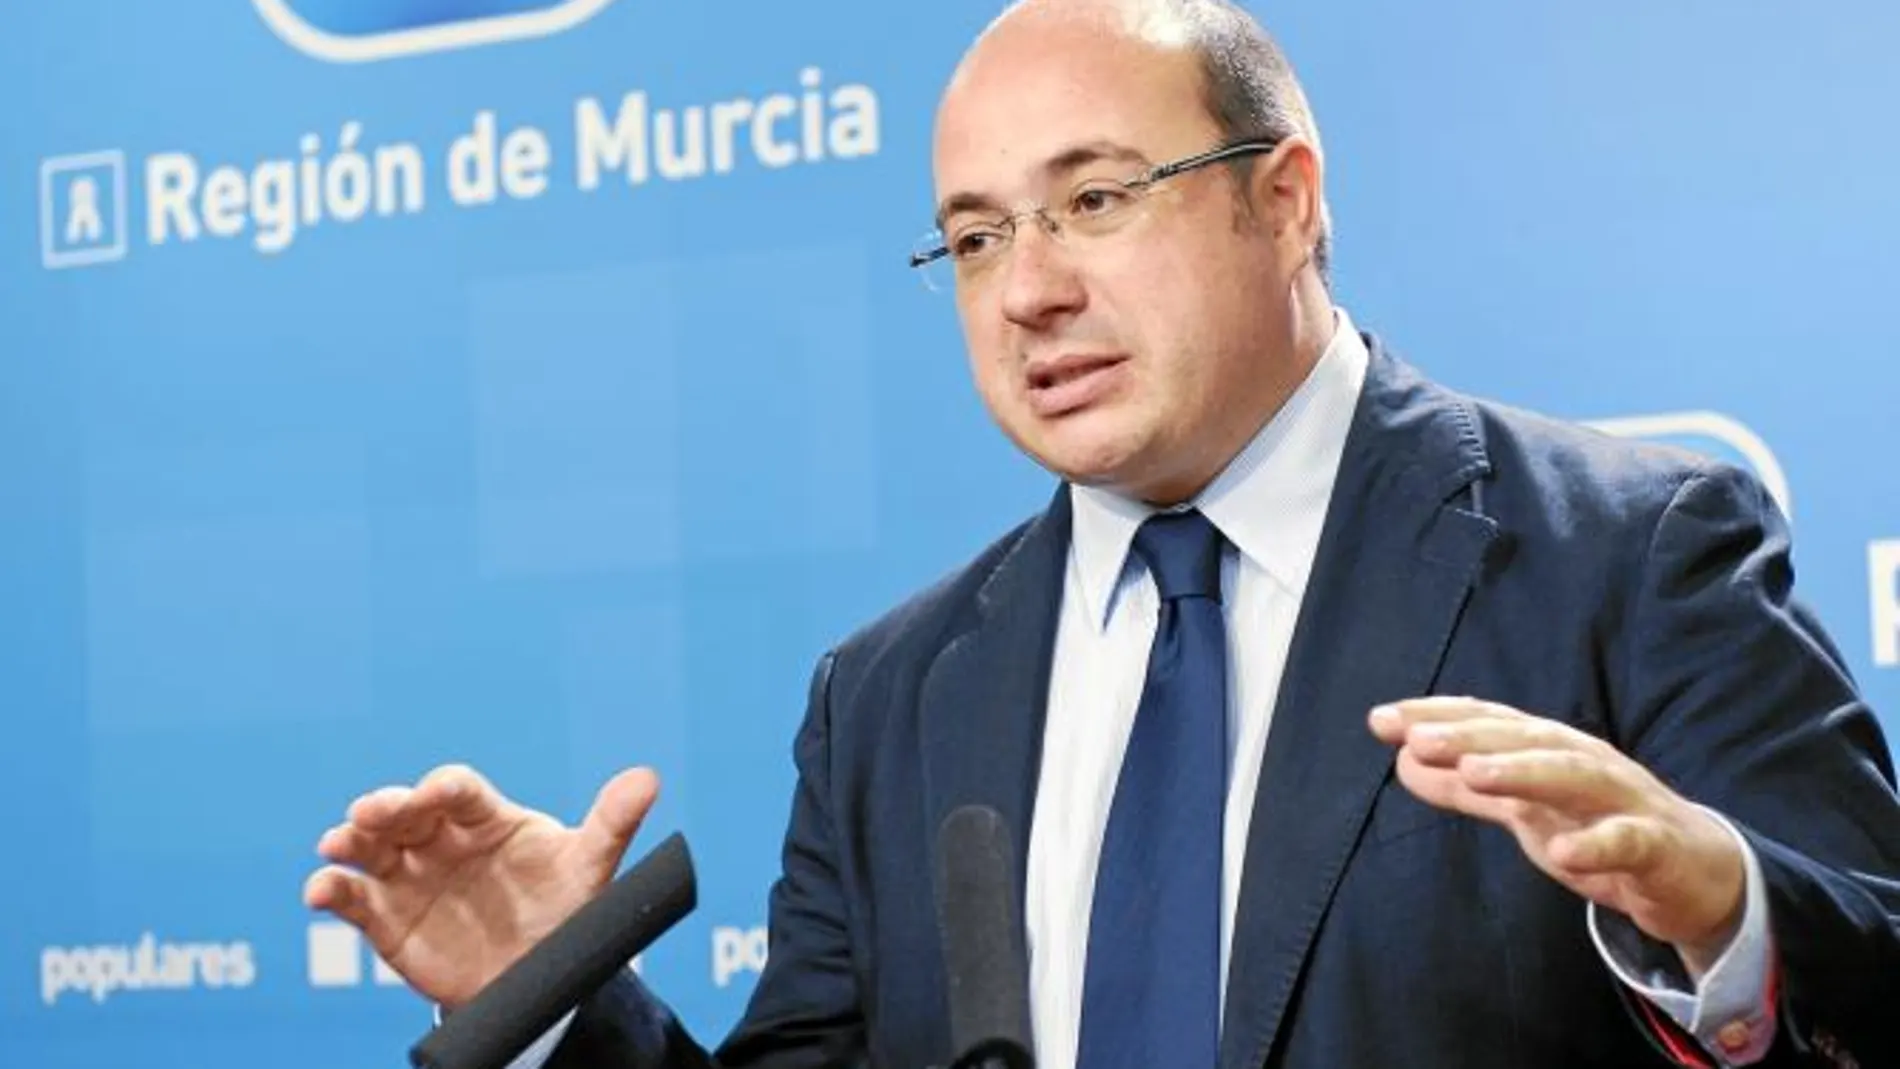 La Audiencia Nacional vuelve a eximir al expresidente de Murcia de responsabilidad penal en 'Púnica'